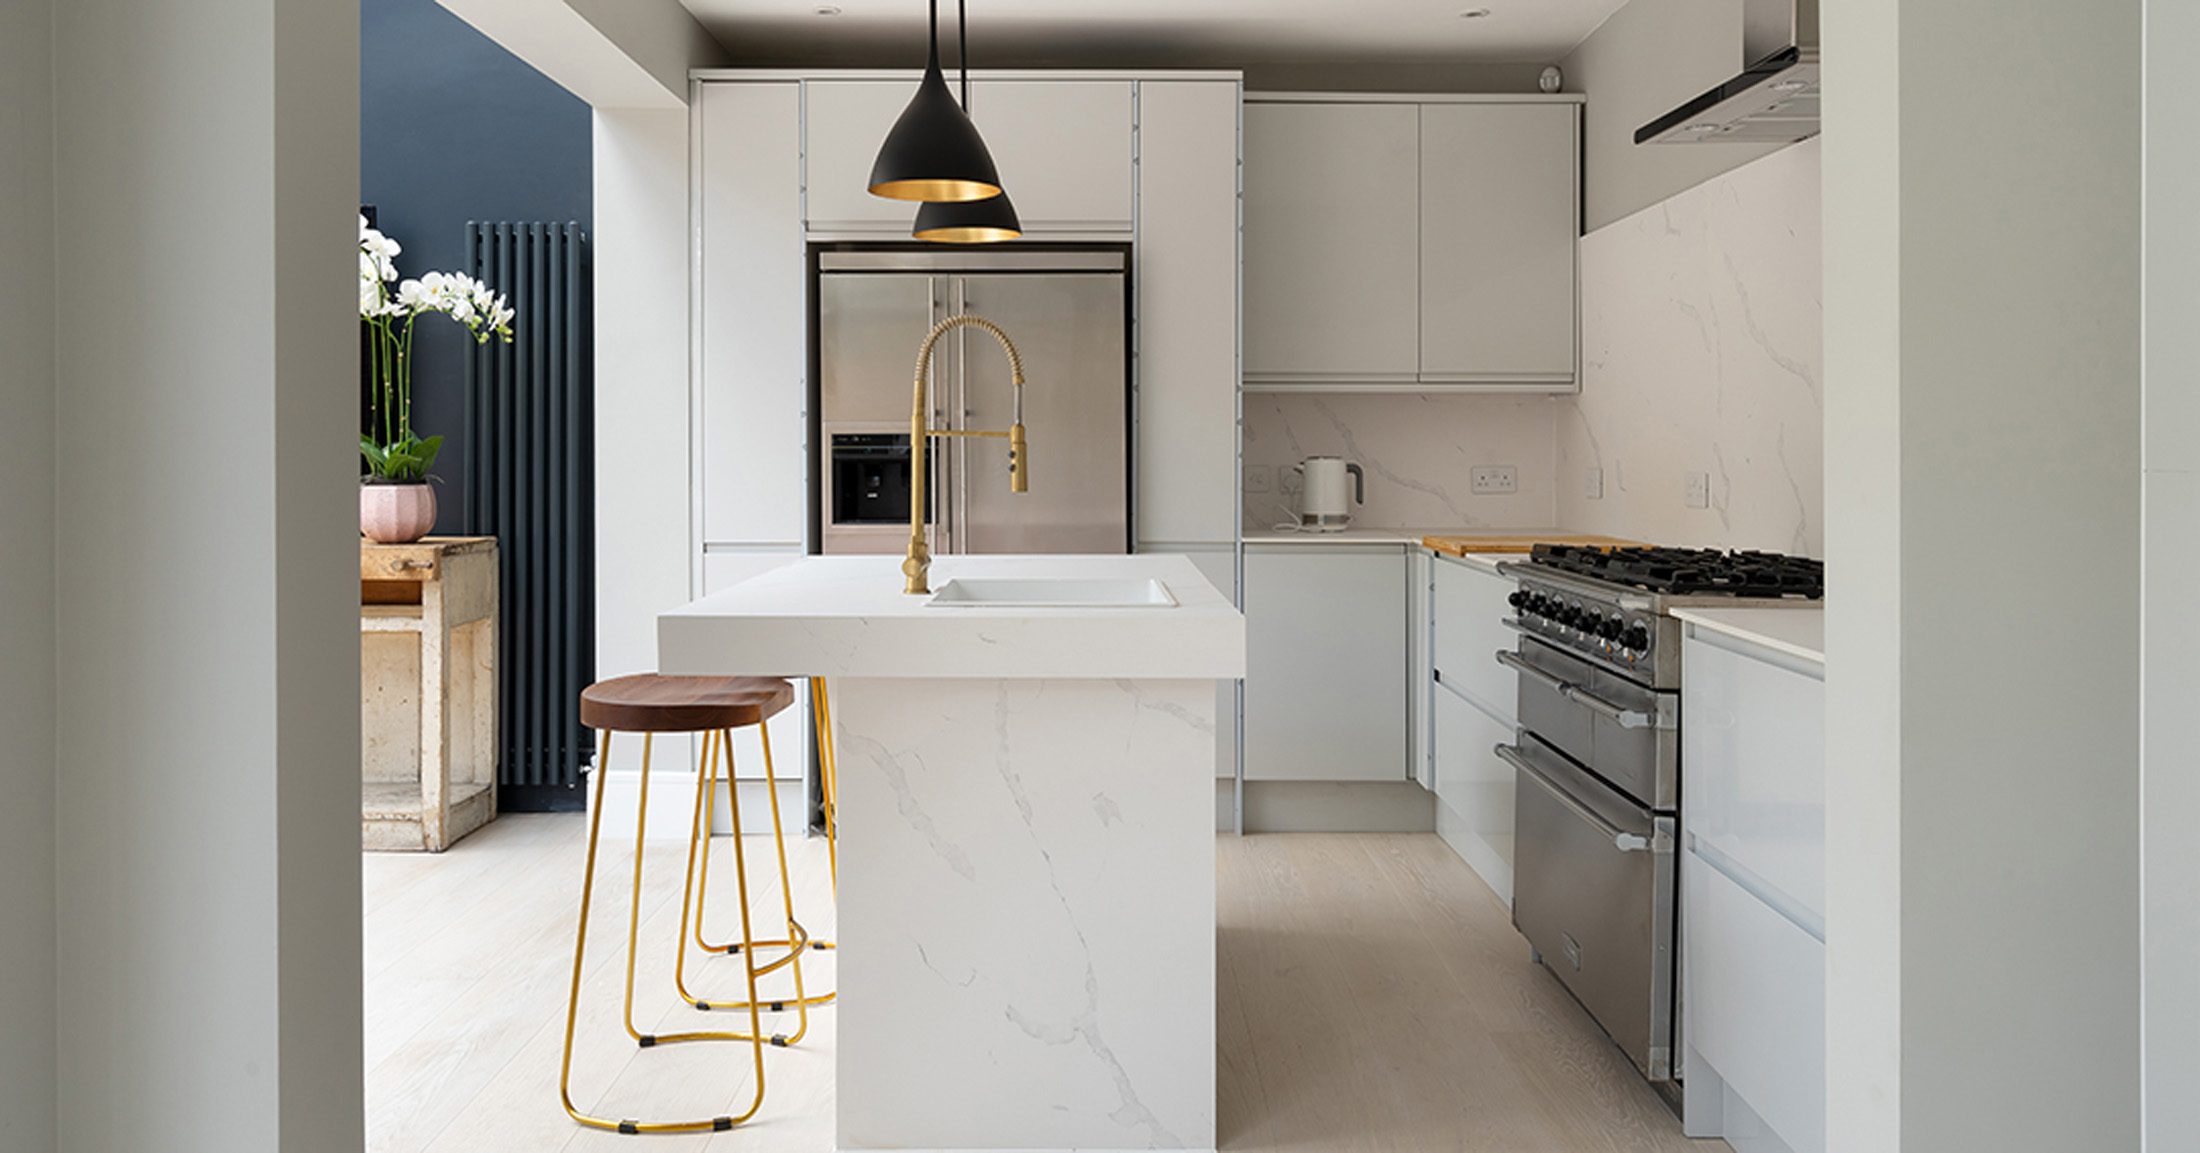 For Sale: Cambridge Gardens Notting Hill W11 minimalist luxury kitchen